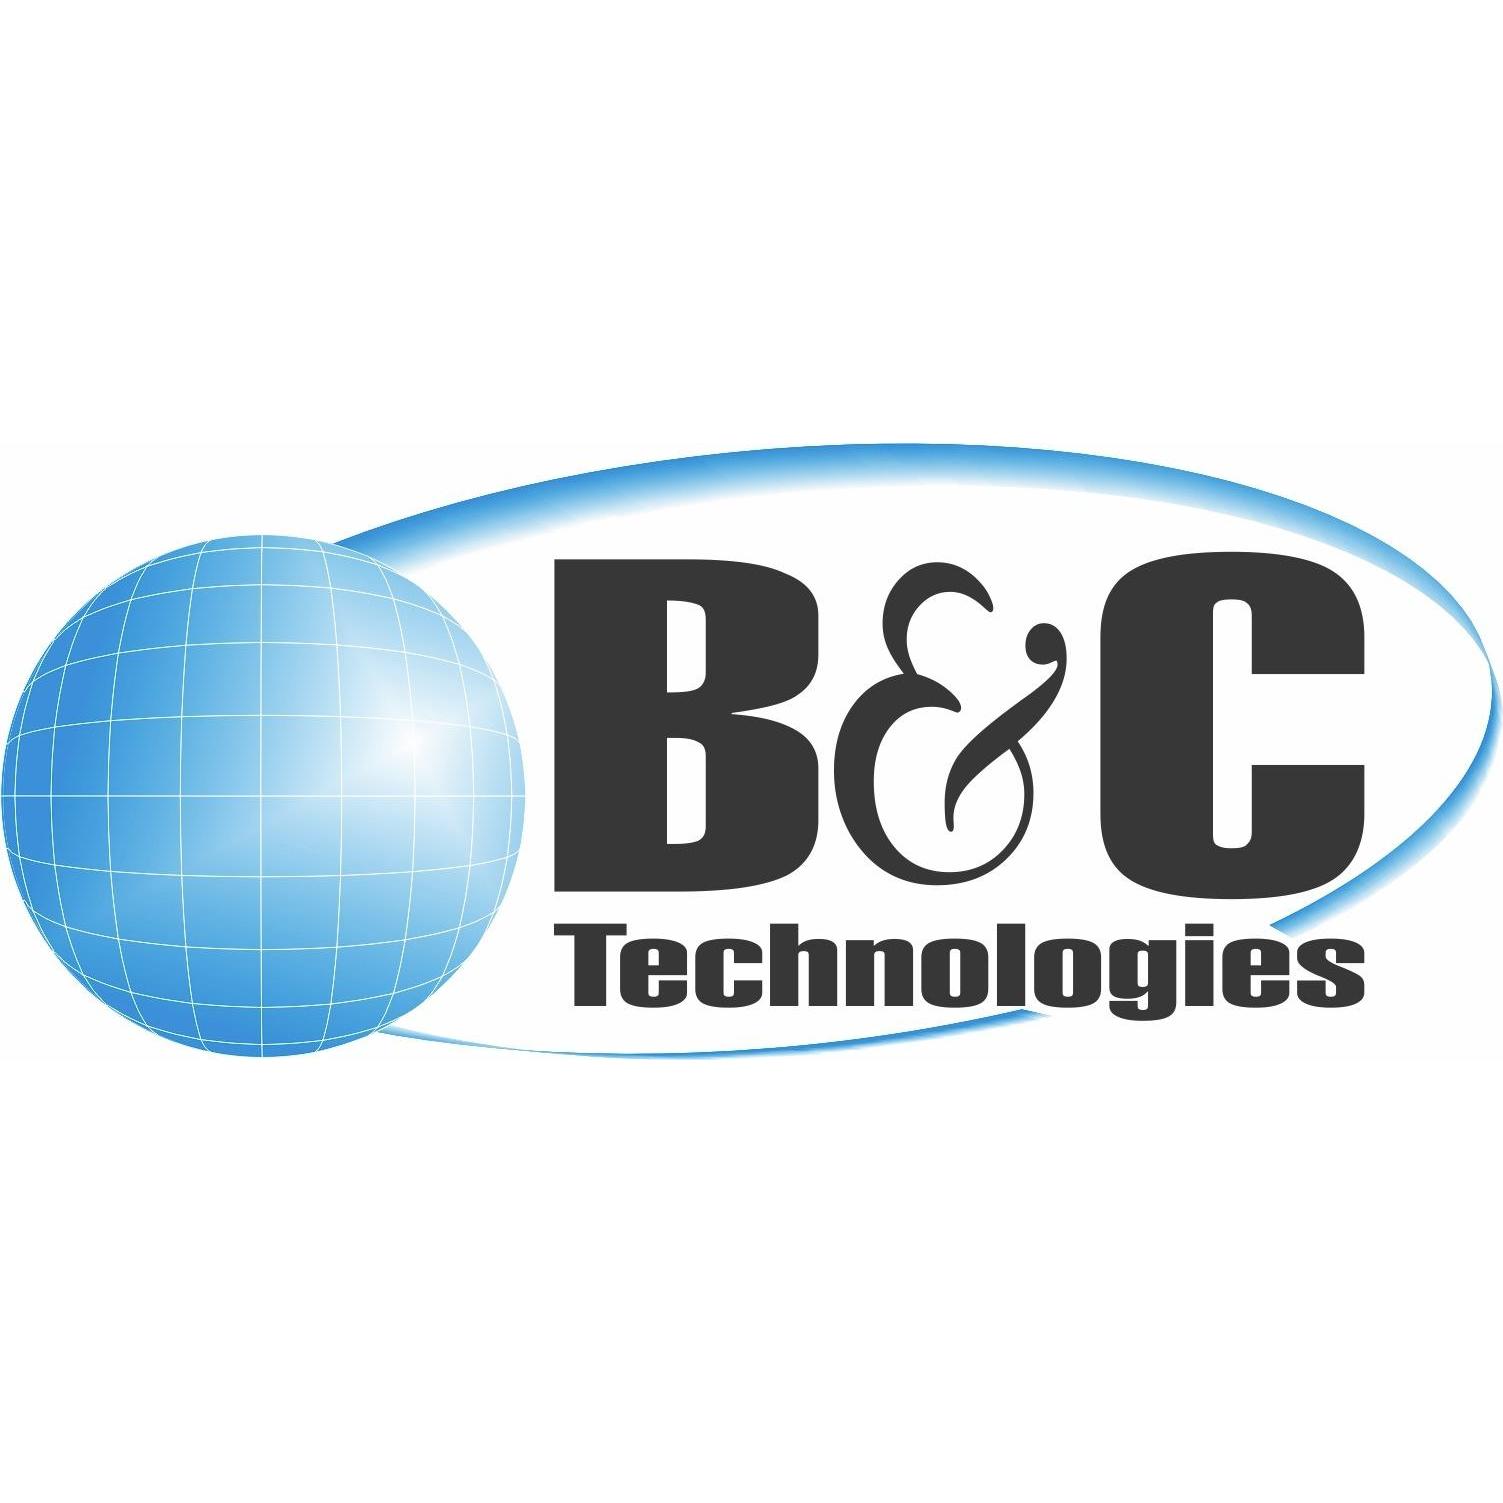 B&C Technologies - Panama City Beach, FL 32413 - (850)249-2222 | ShowMeLocal.com